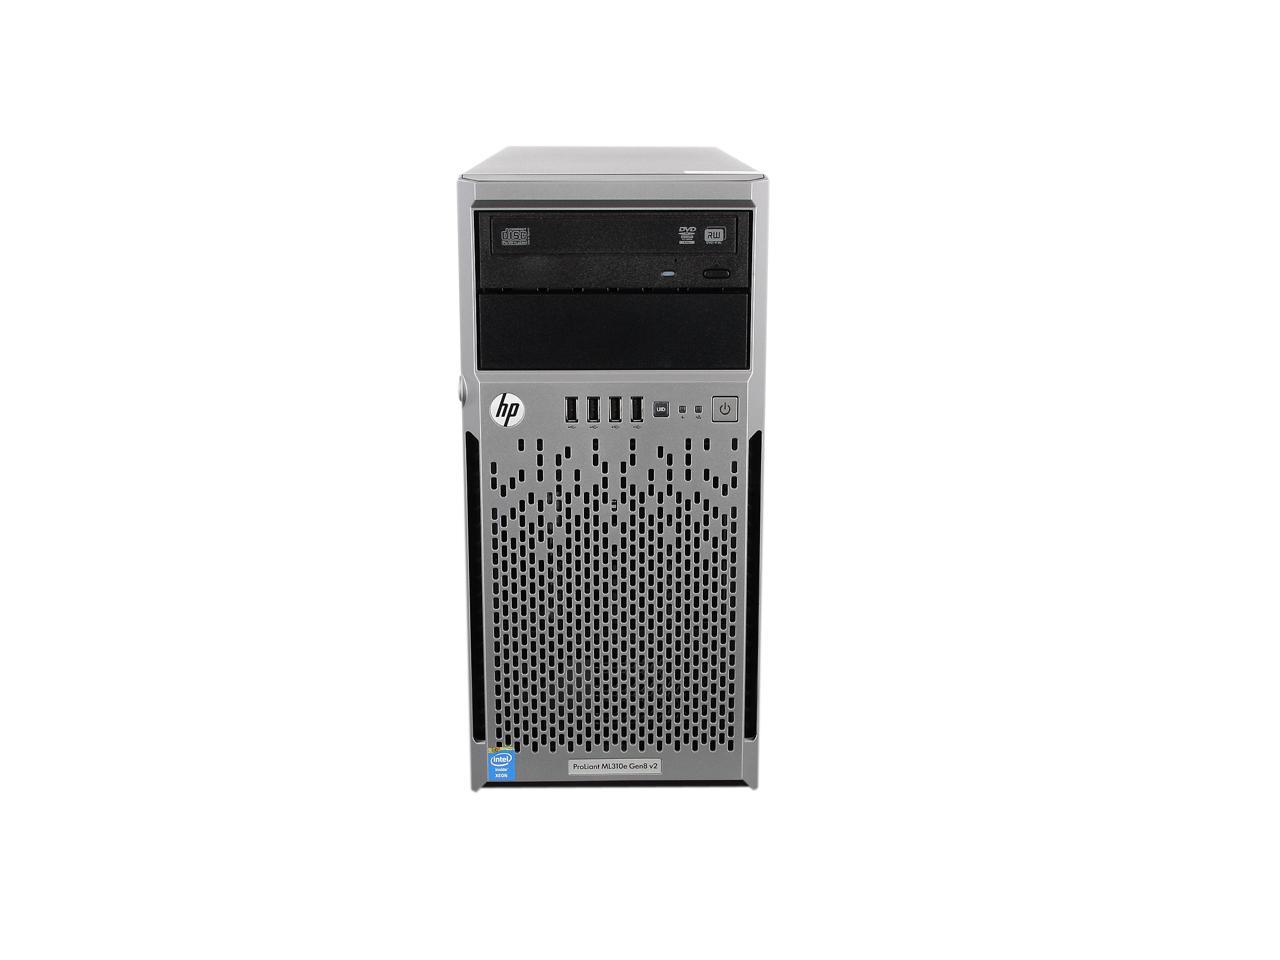 Hp Proliant Ml310e Gen8 Micro Tower Server System Intel Xeon 1230 V3 3 3 Ghz 4c 8t 2 X 4gb Ddr3 S01 Newegg Com